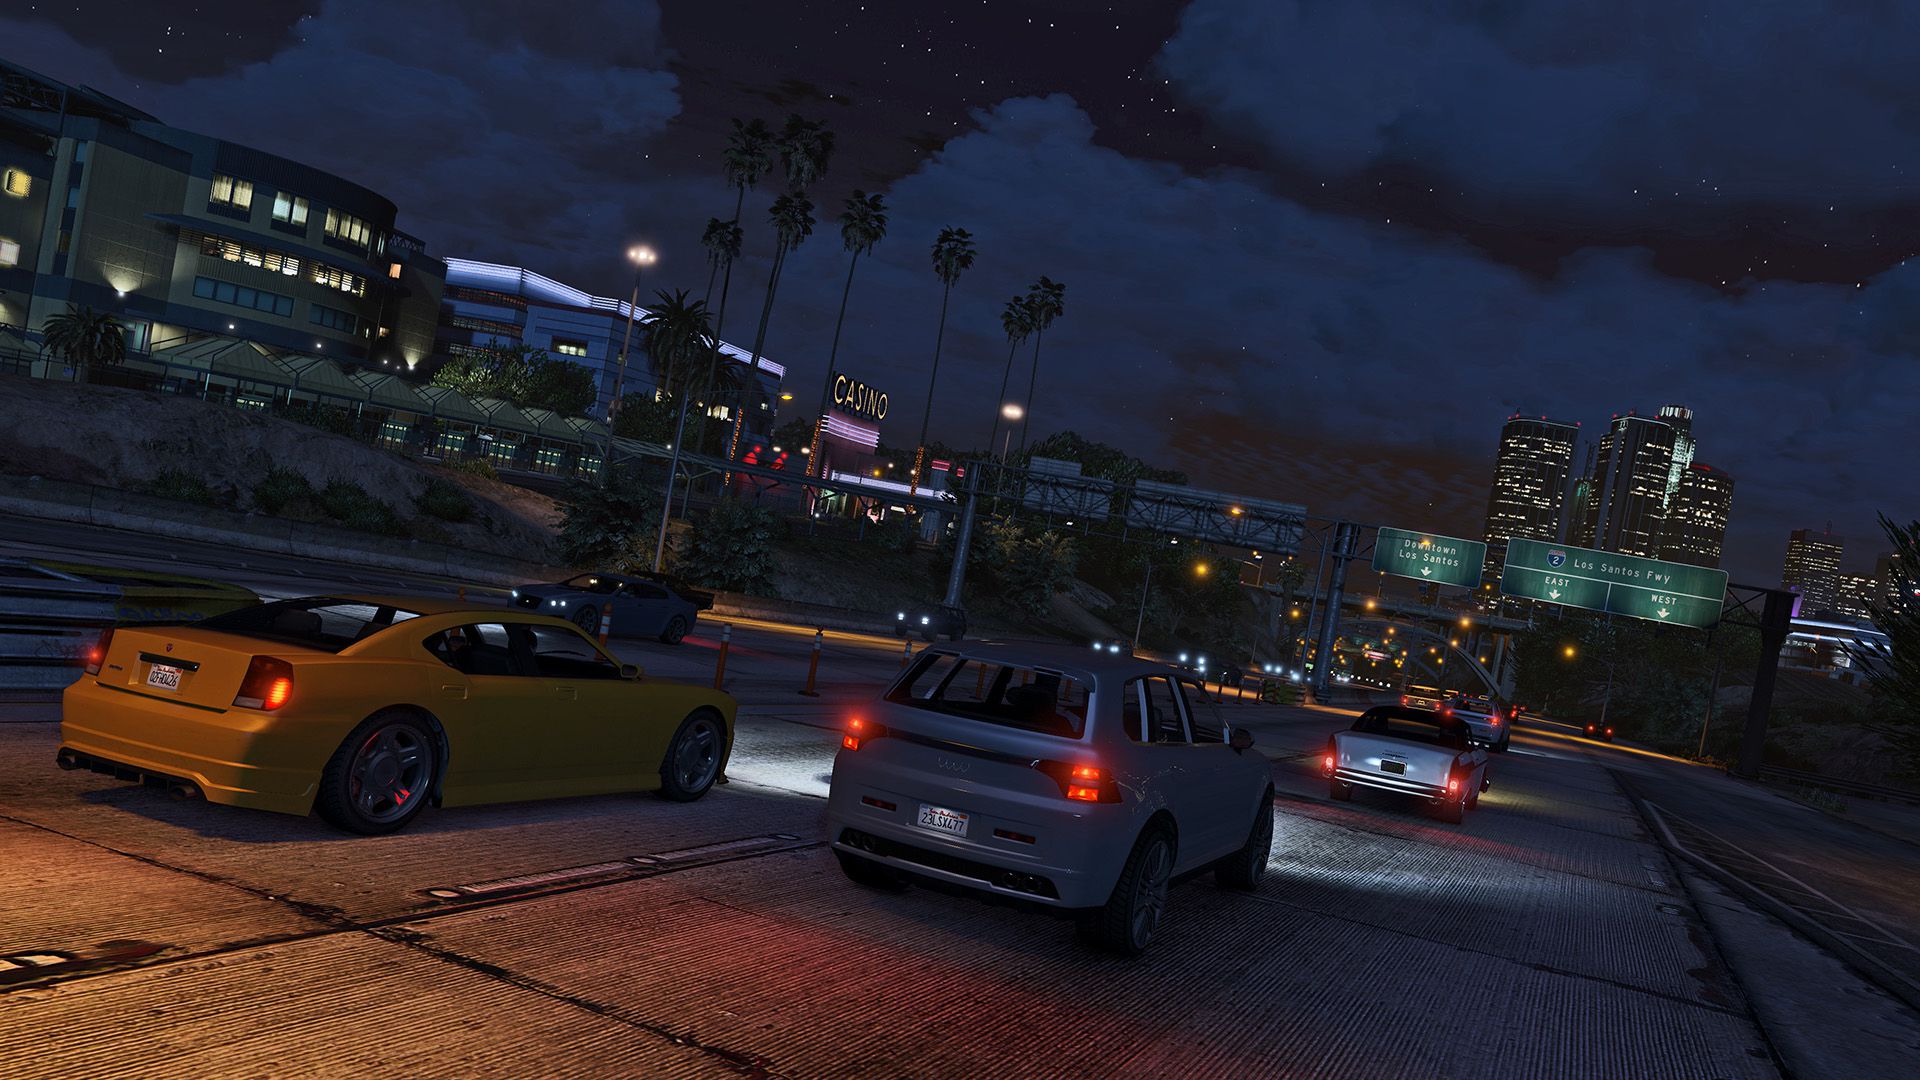 instal the last version for windows Grand Theft Auto V: Premium Edition